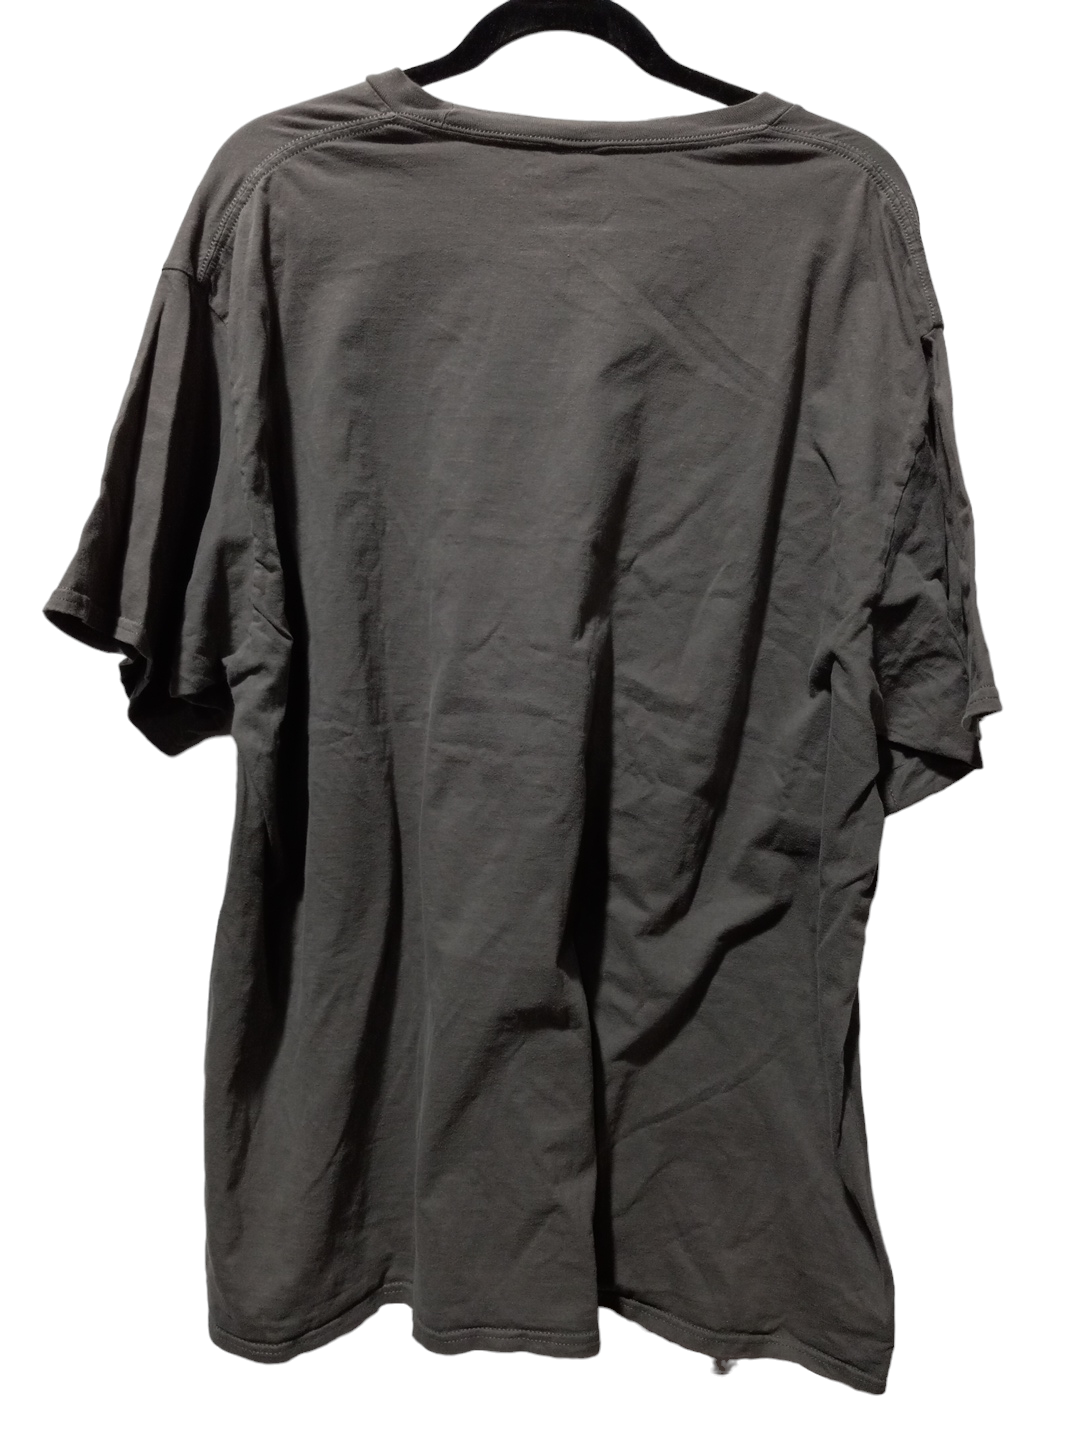 Grey Top Short Sleeve Clothes Mentor, Size 3x